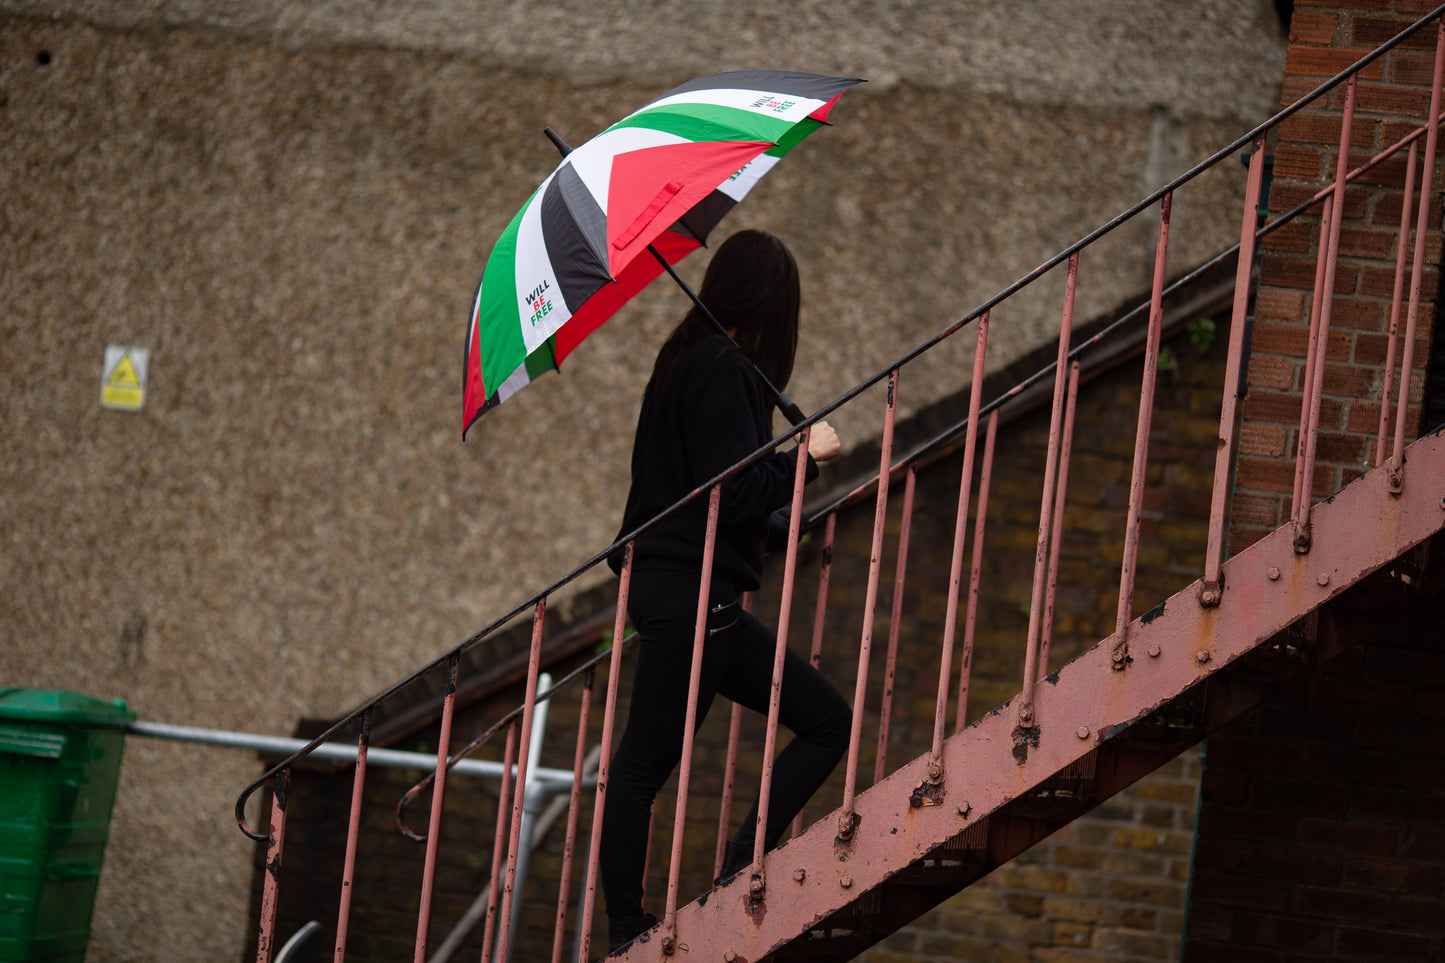 Umbrella 'Palestine Will Be Free'